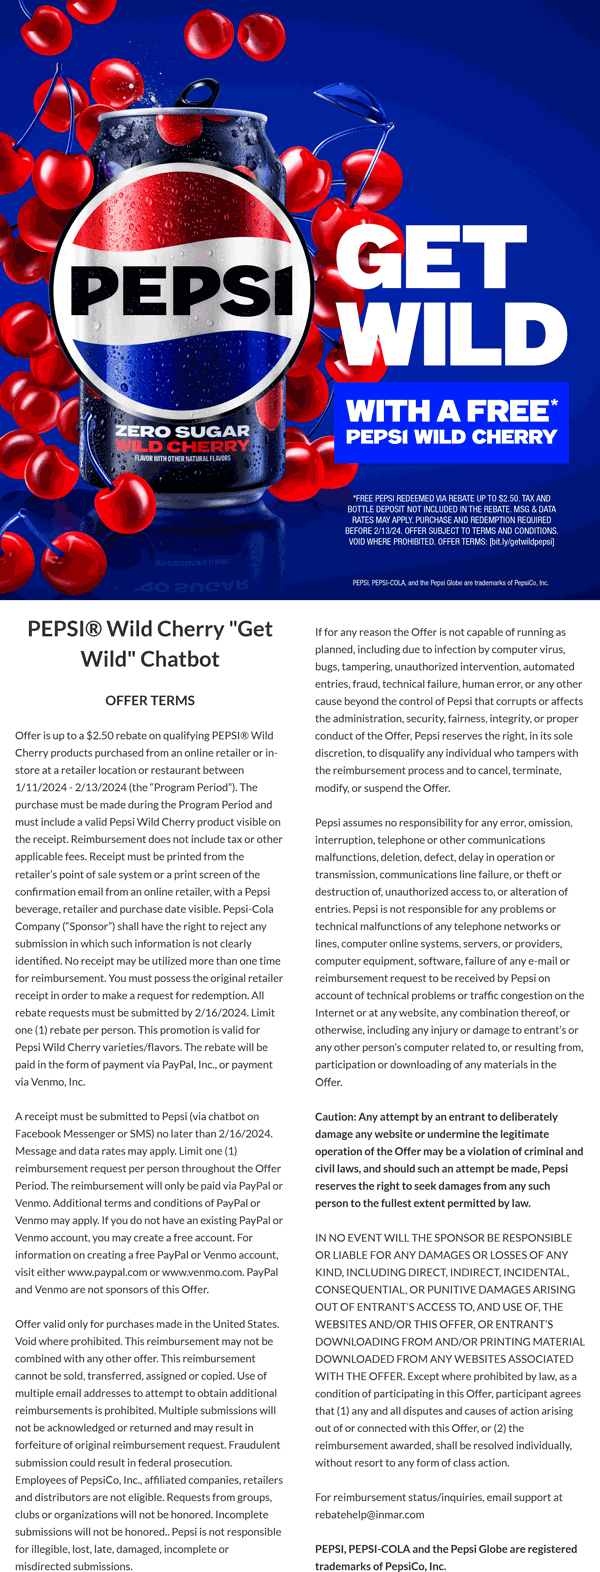 Free wild cherry Pepsi drink via rebate photo upload #pepsi